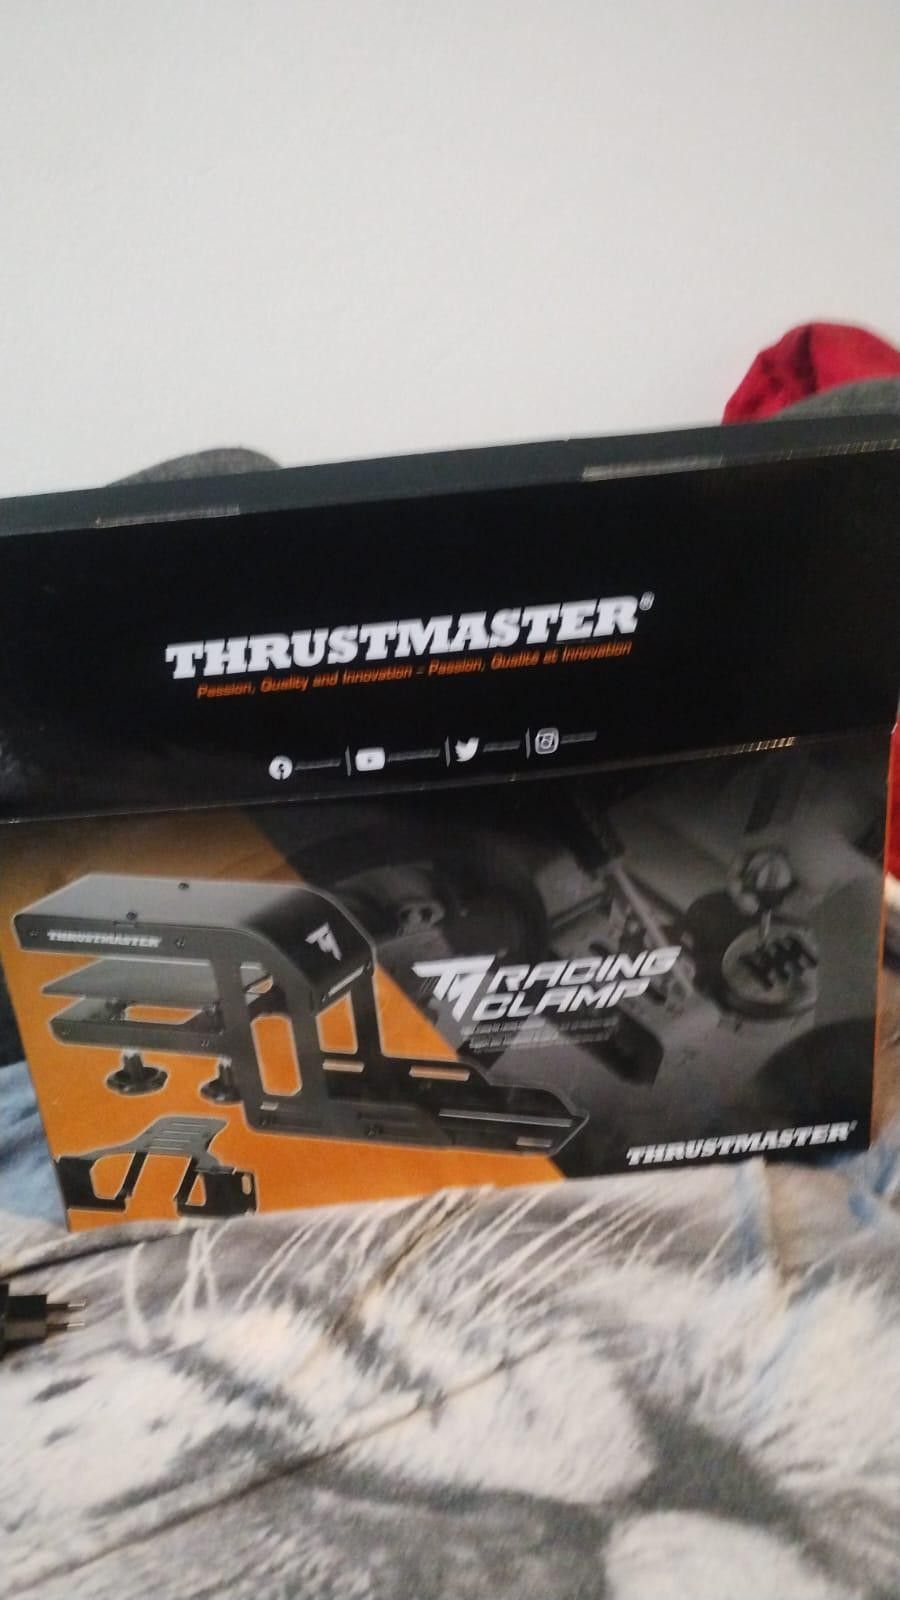 Thrustmaster racing clamp